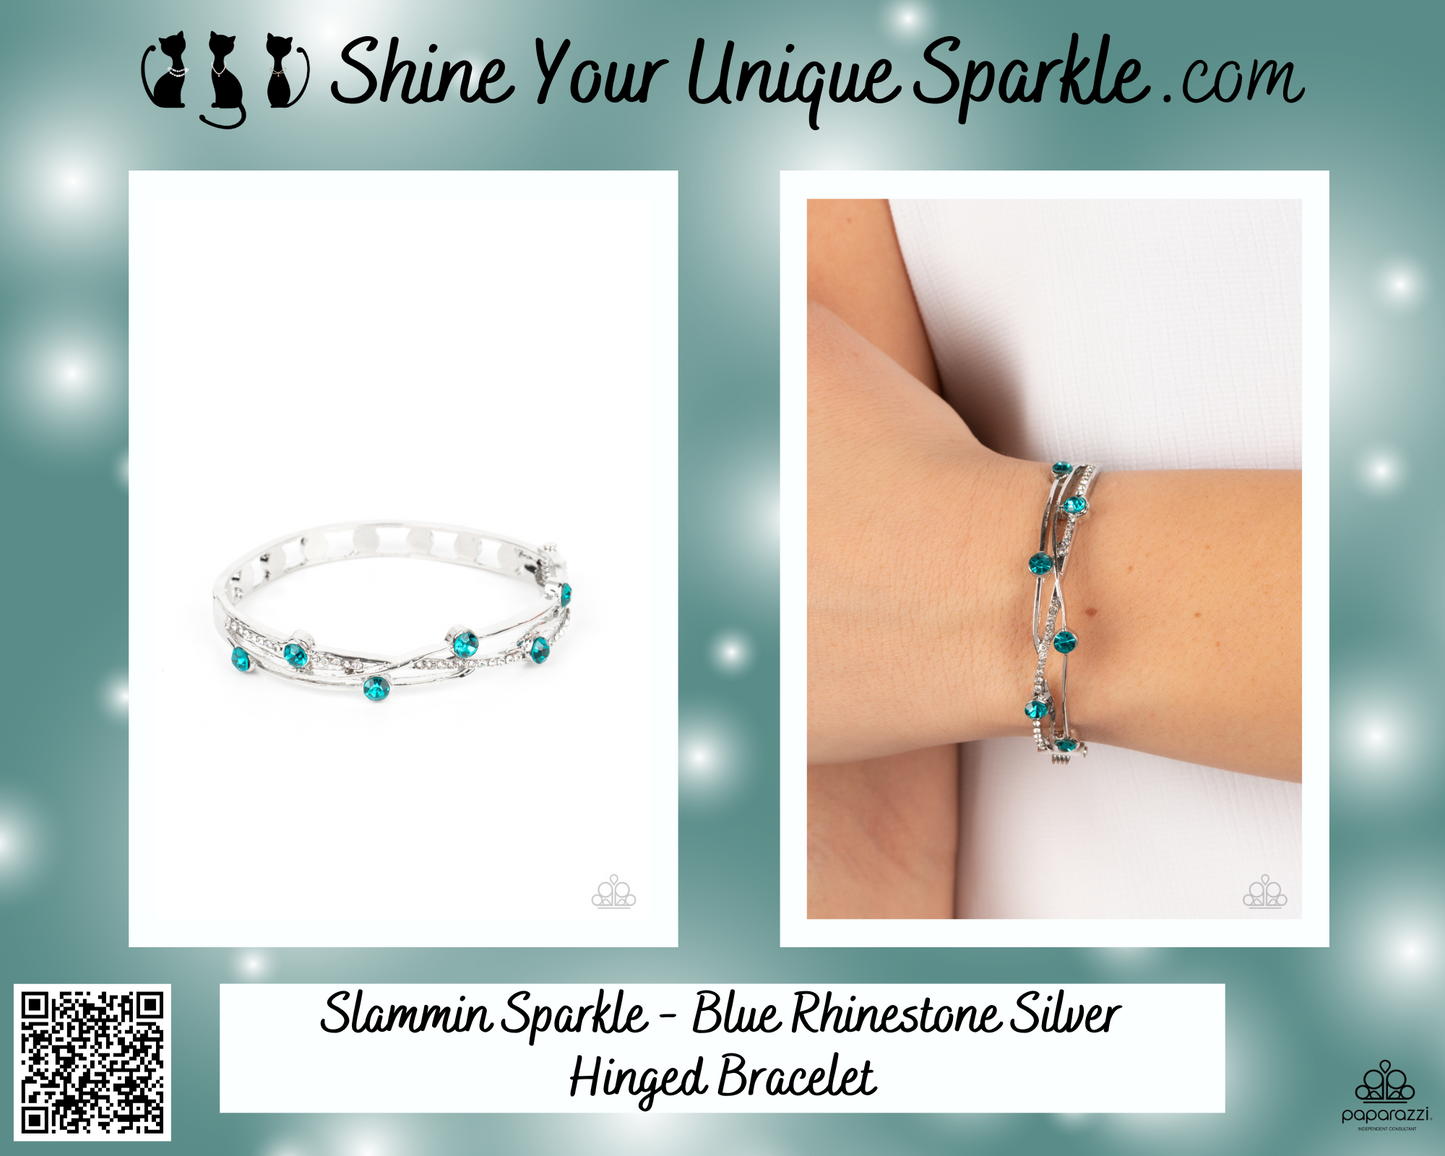 Slammin Sparkle - Blue Rhinestone Silver Hinged Bracelet